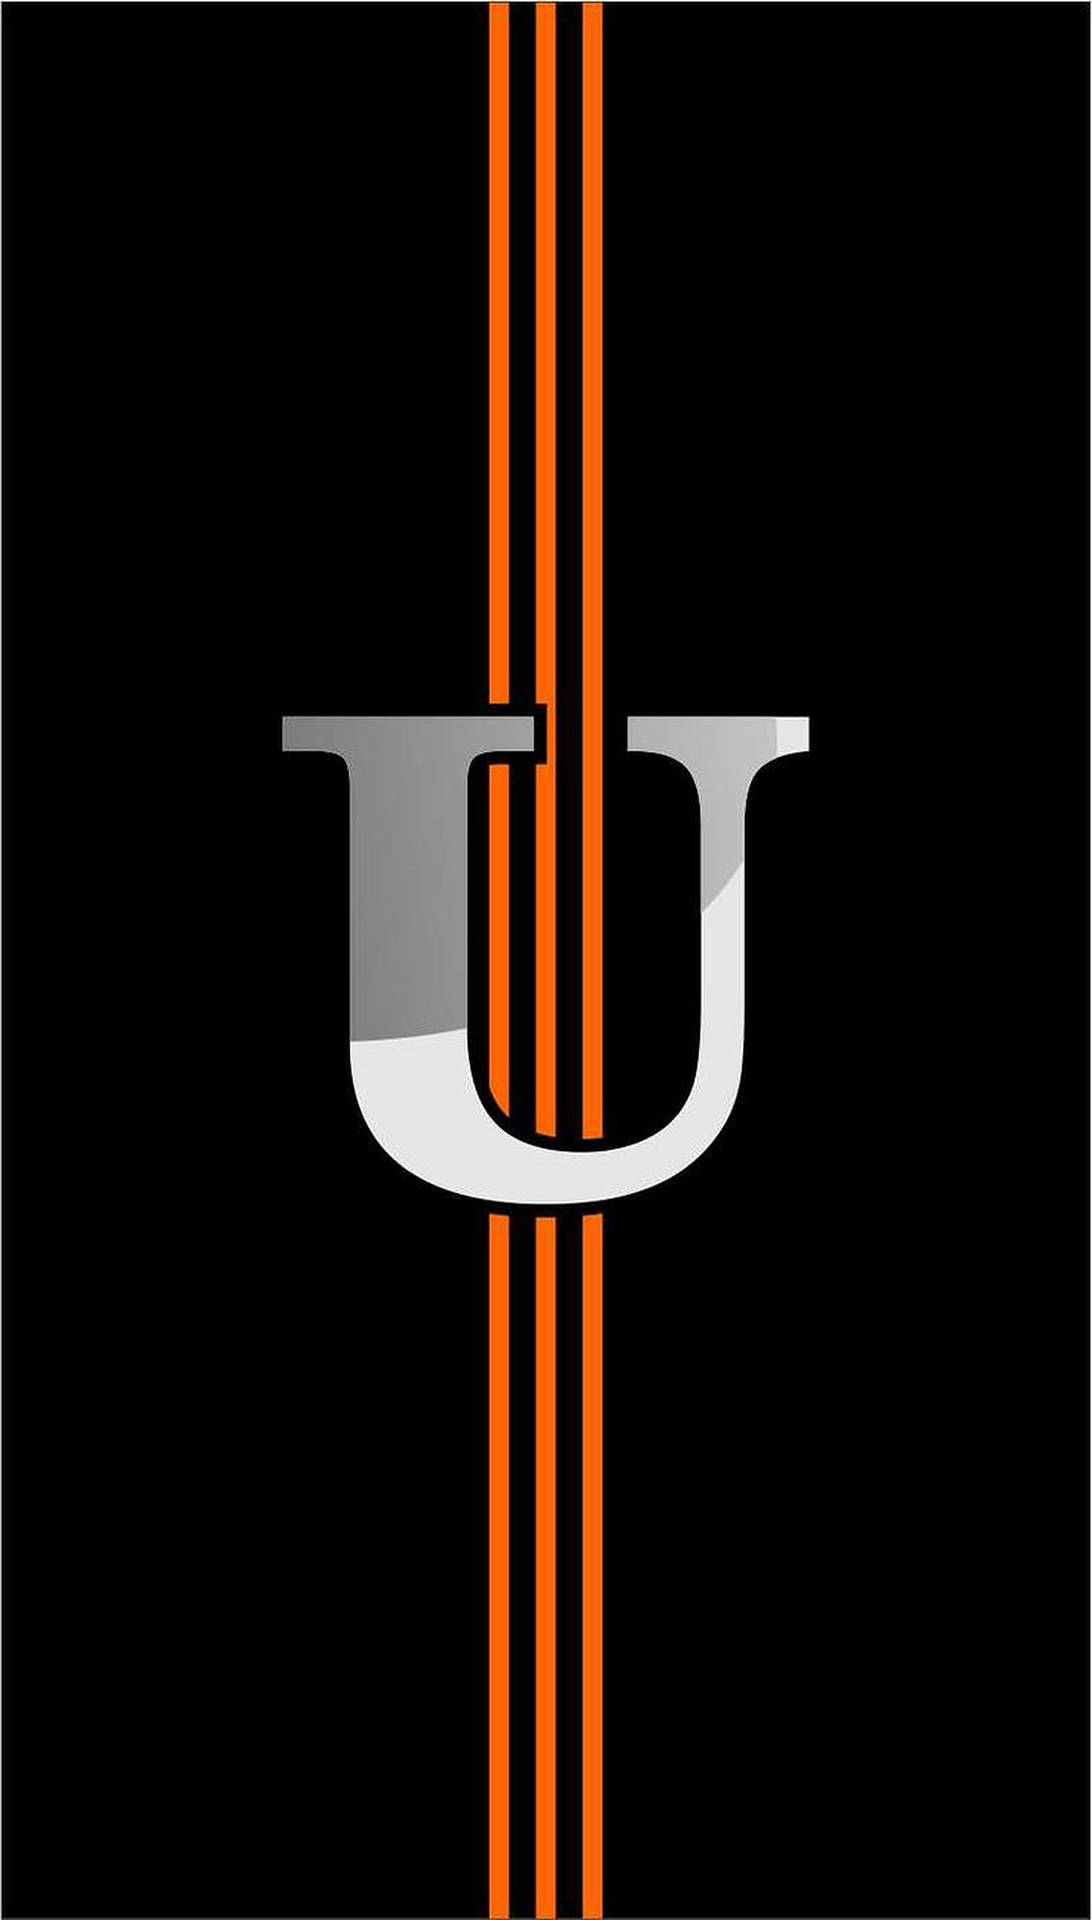 Orange Striped Letter U